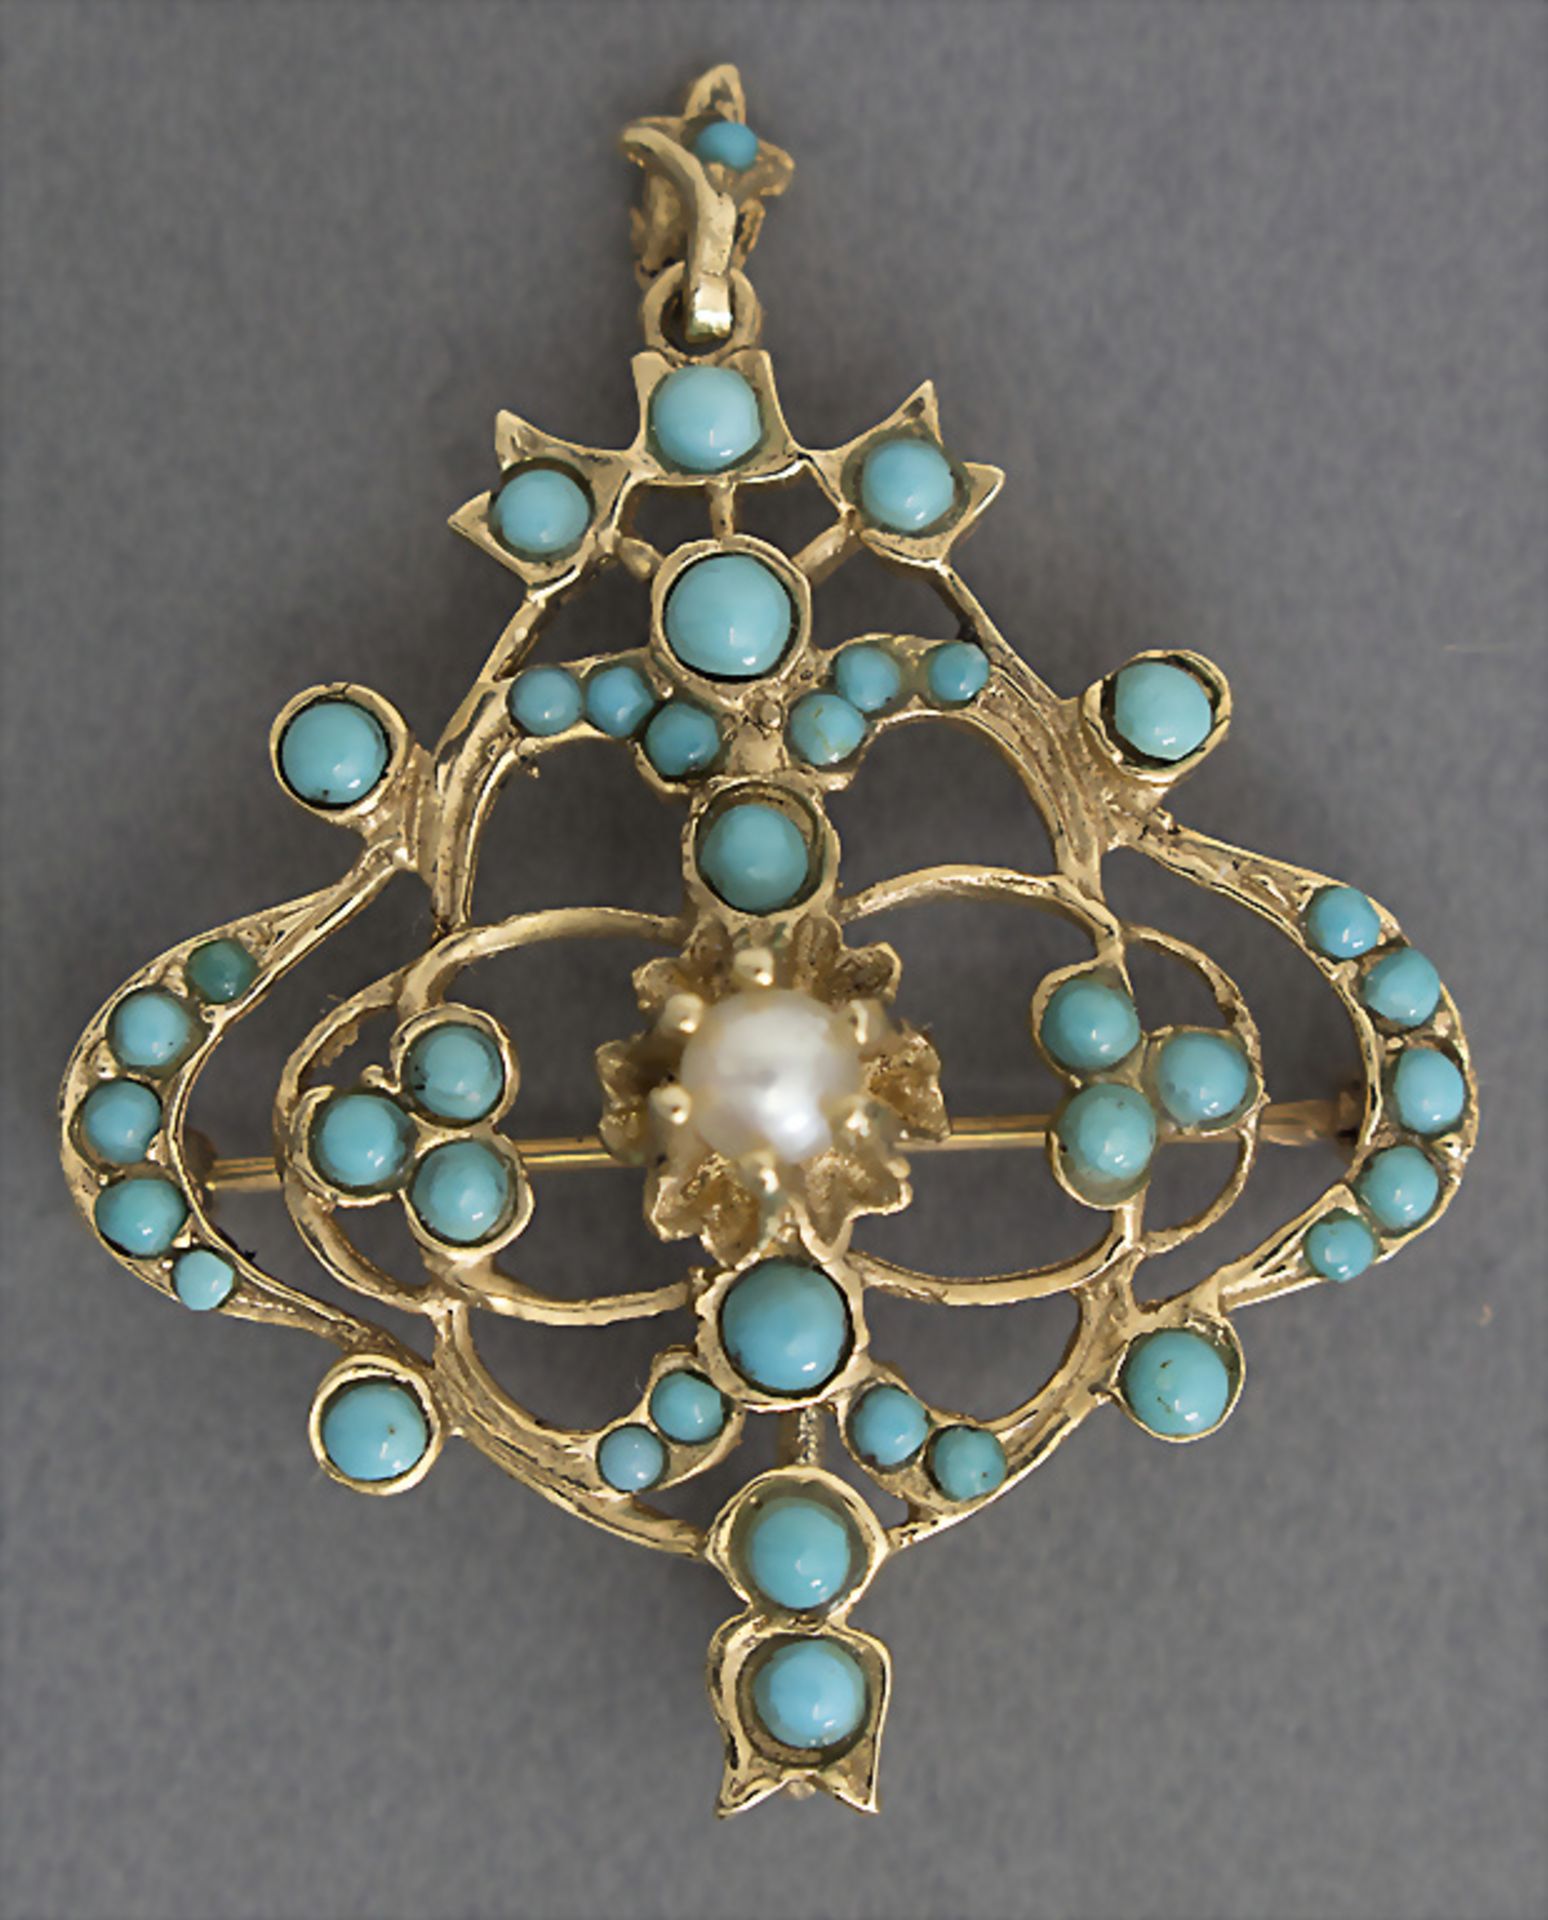 Brosche und Anhänger mit Türkise / A brooch and pendant with turquoise